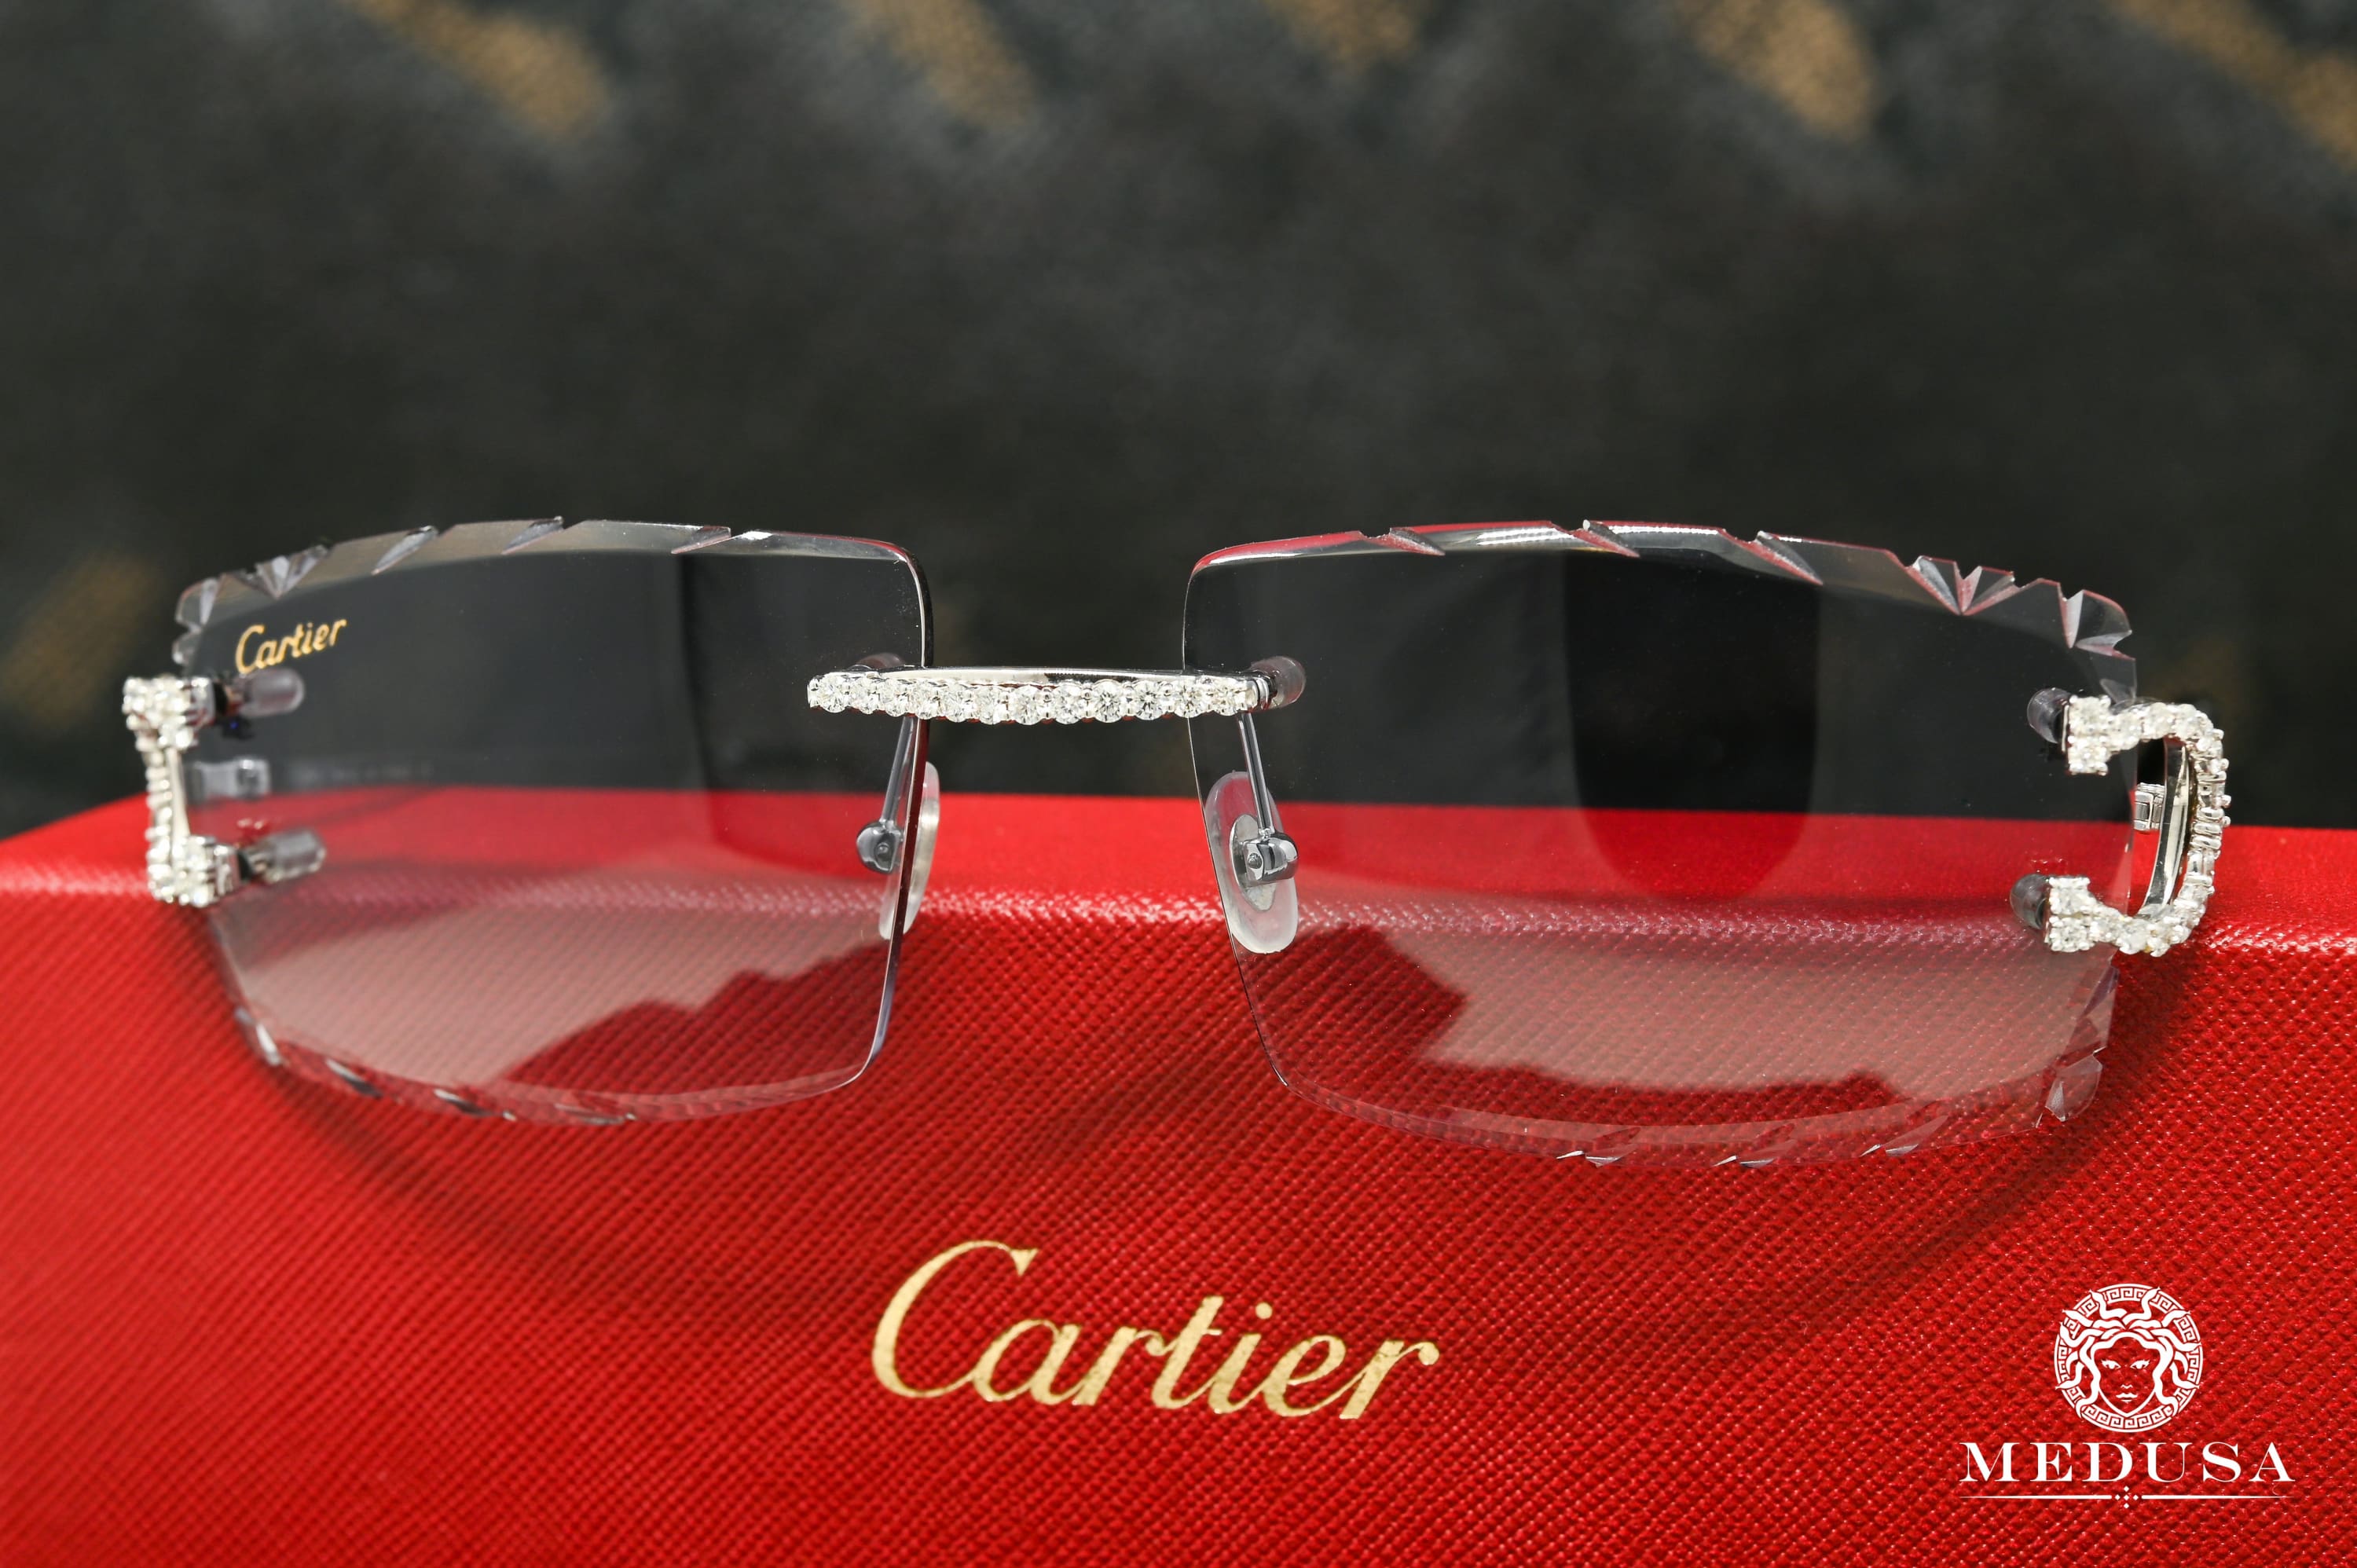 Cartier C | Silver u0026 Black Diamond Cut Lenses